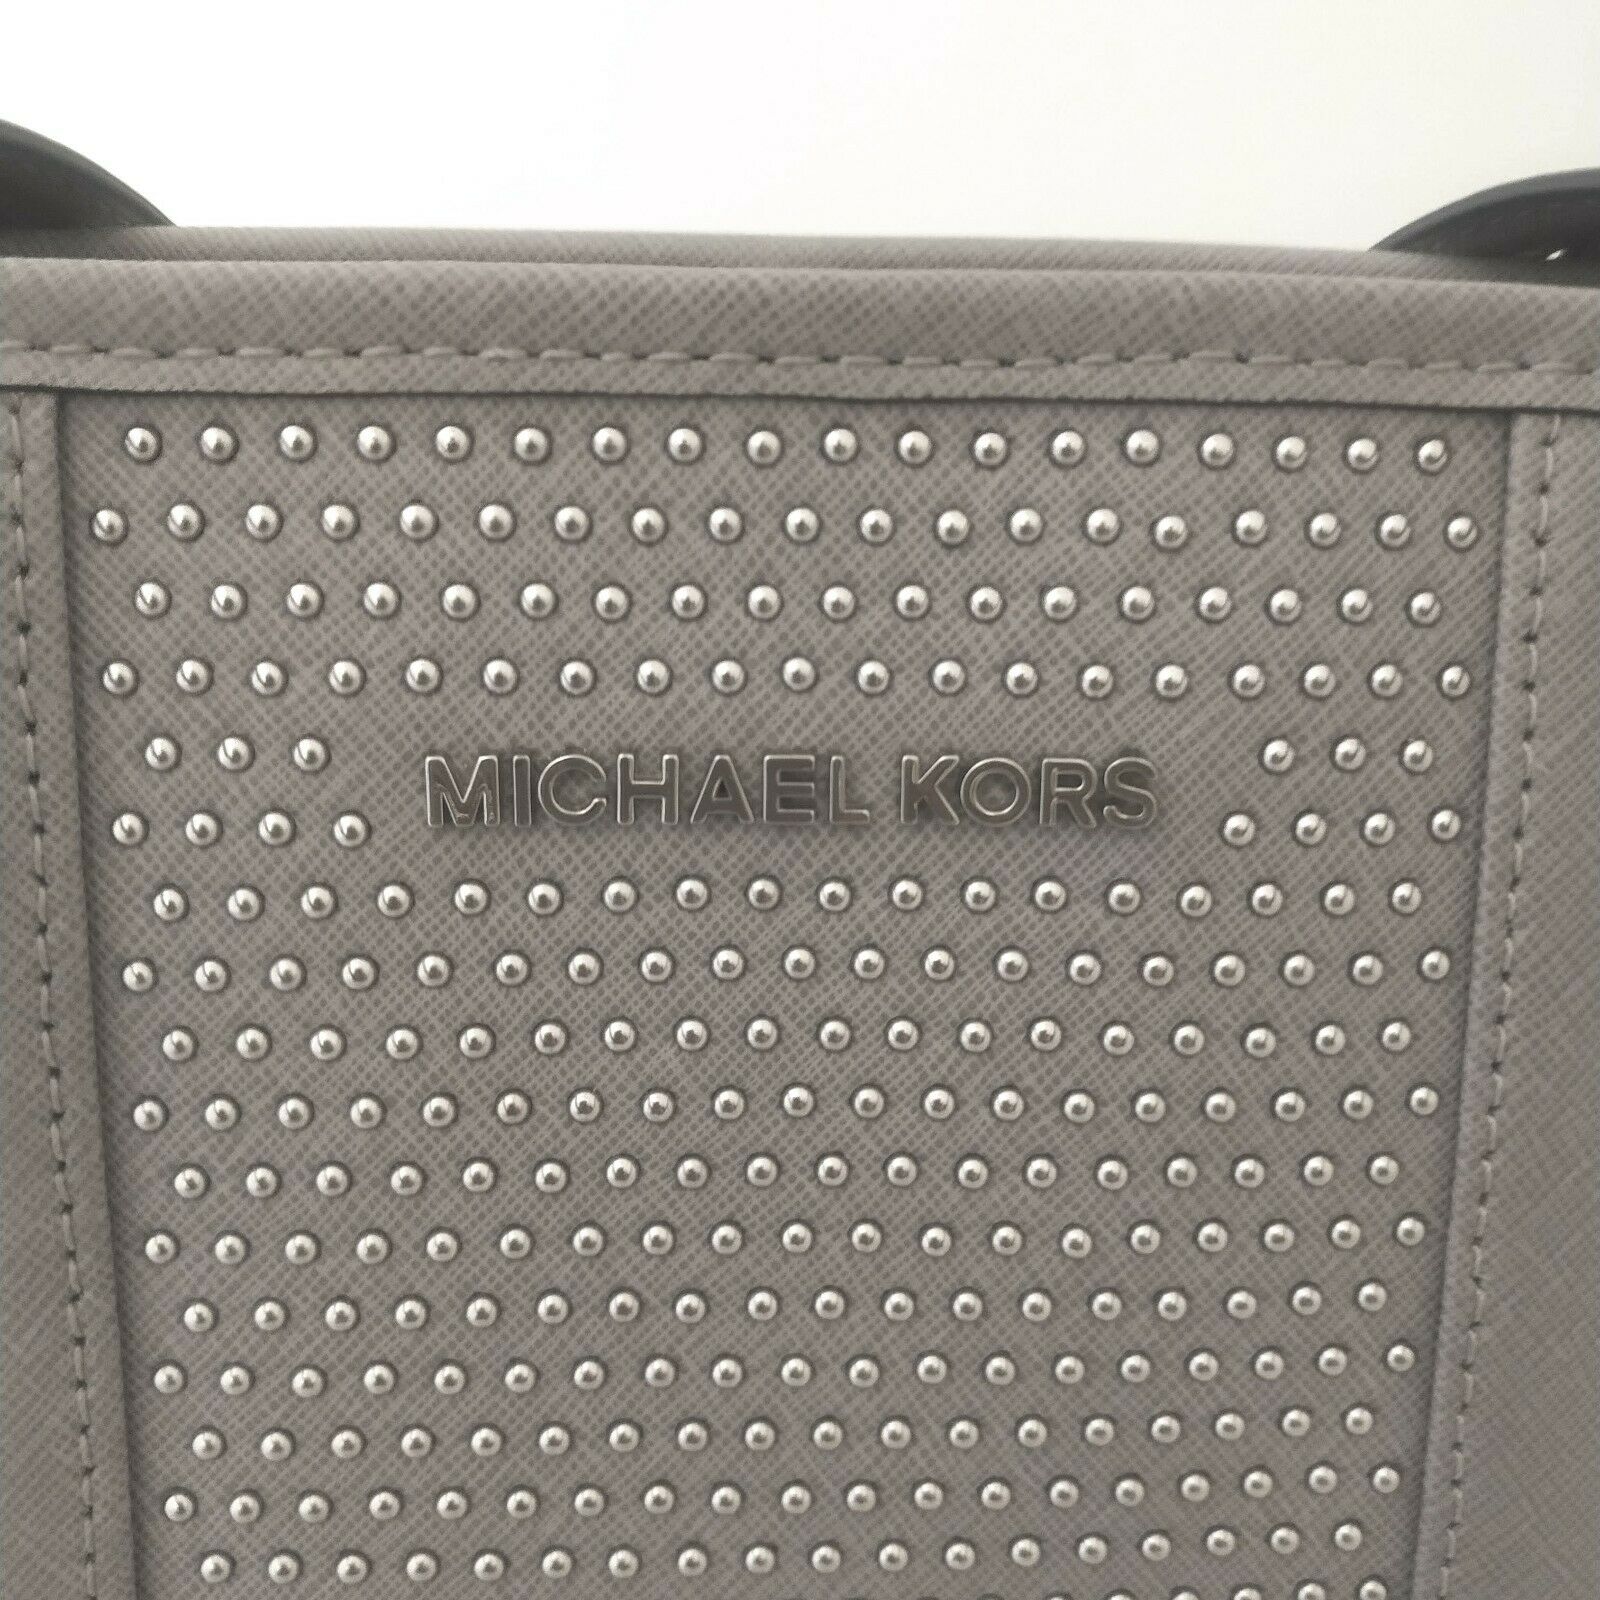 Michael Kors Saffiano Stud Luggage Leather